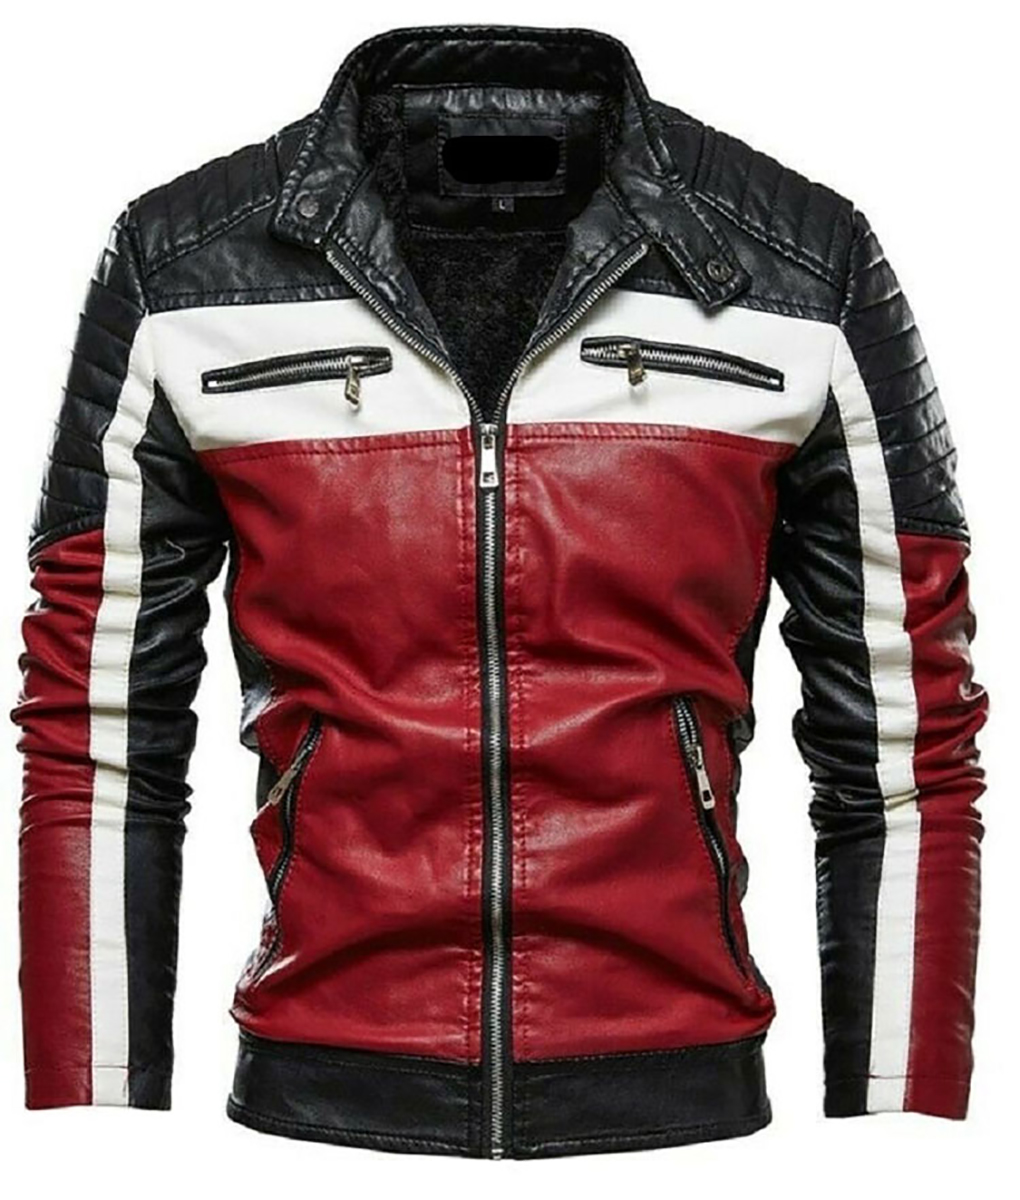 Men's Black & Red Motorcycle Slim Fit Biker Leather Jacket